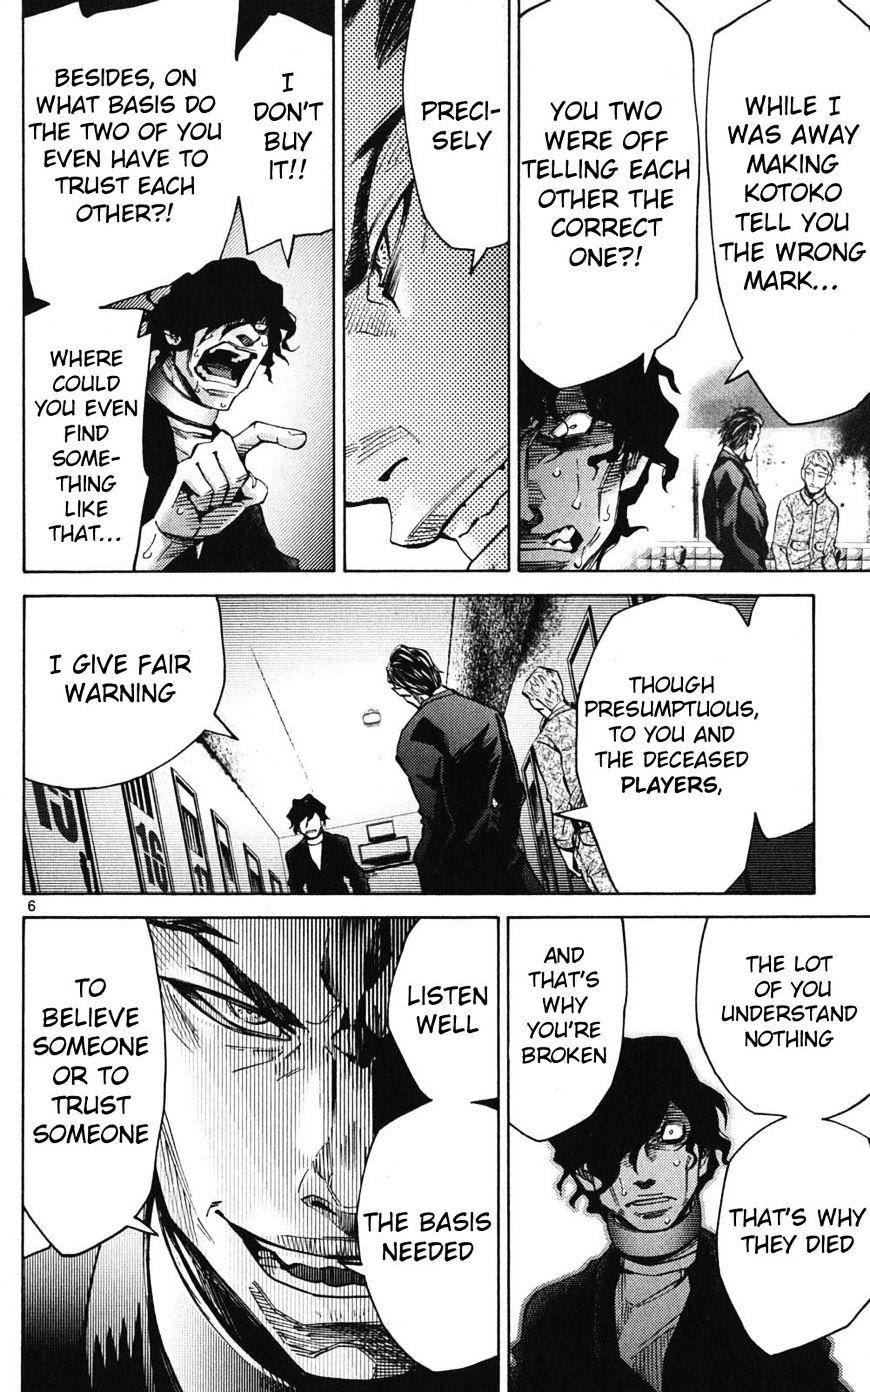 Imawa No Kuni No Alice Chapter 49 : Jack Of Hearts (5) page 6 - Mangakakalot